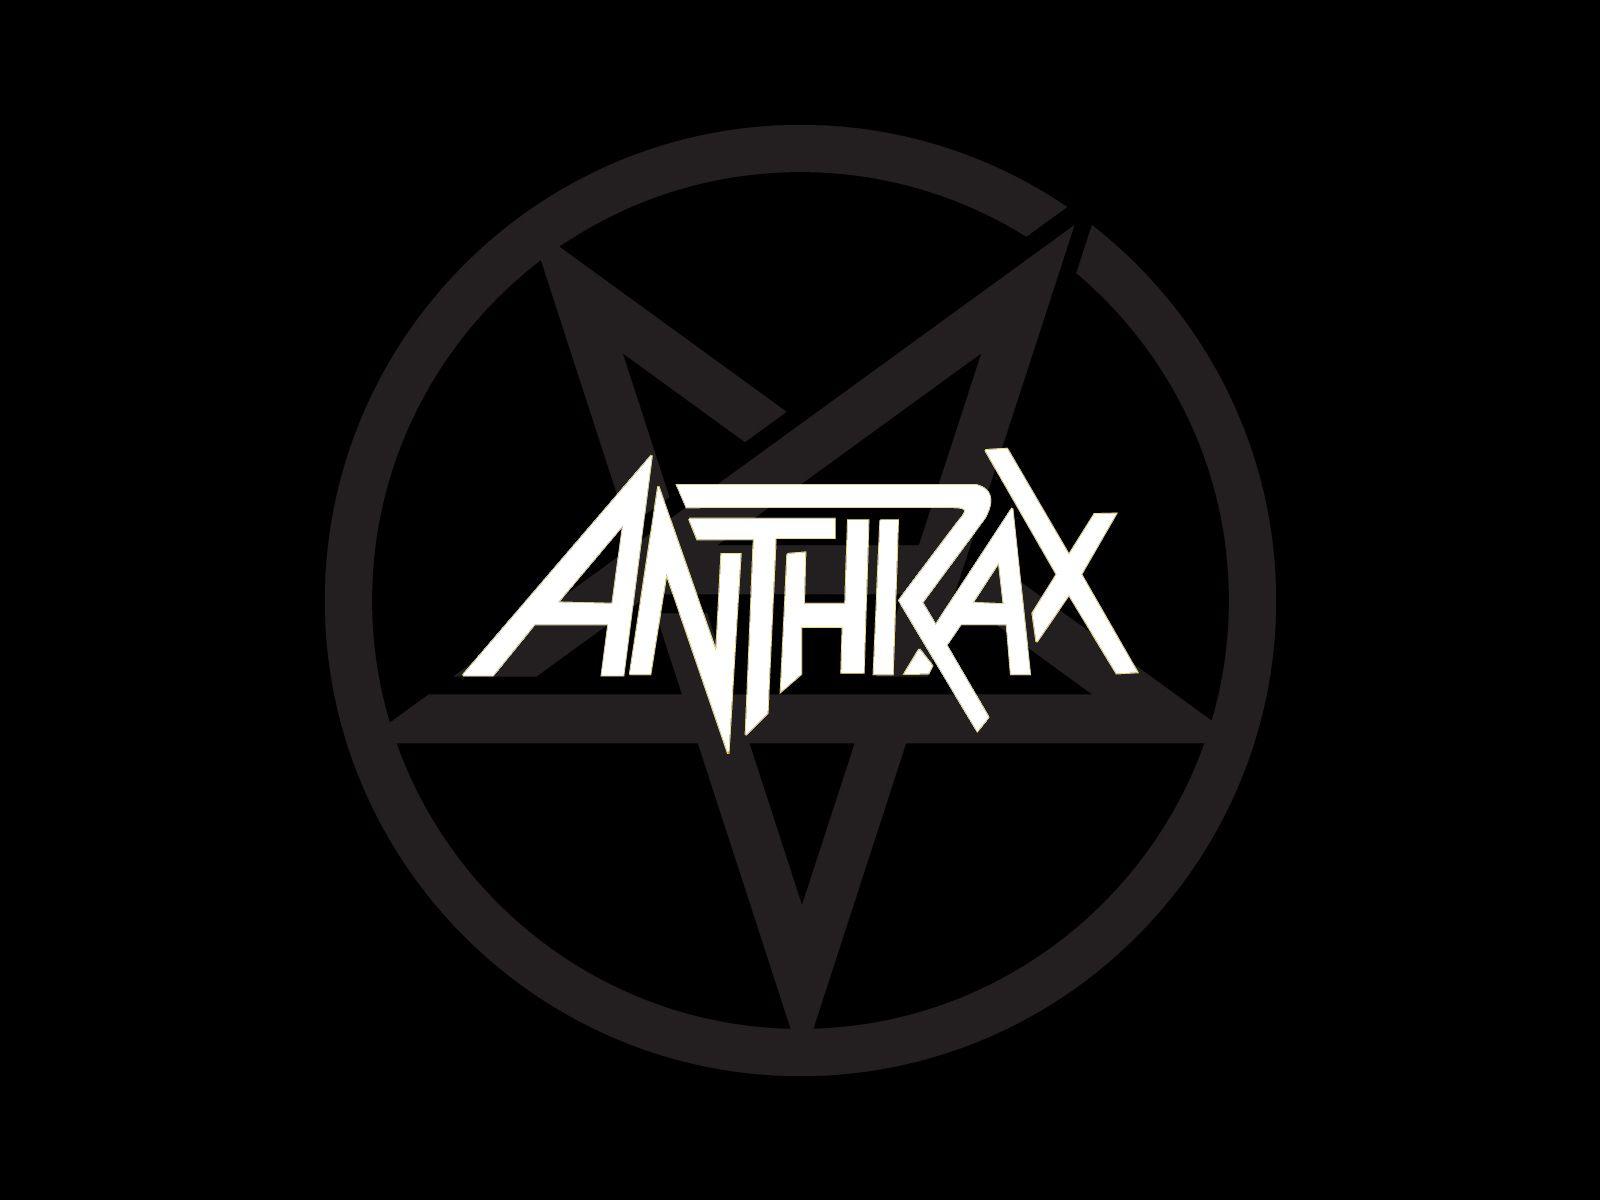 Anthrax Logo - Anthrax logo and Anthrax wallpaper. Band logos band logos